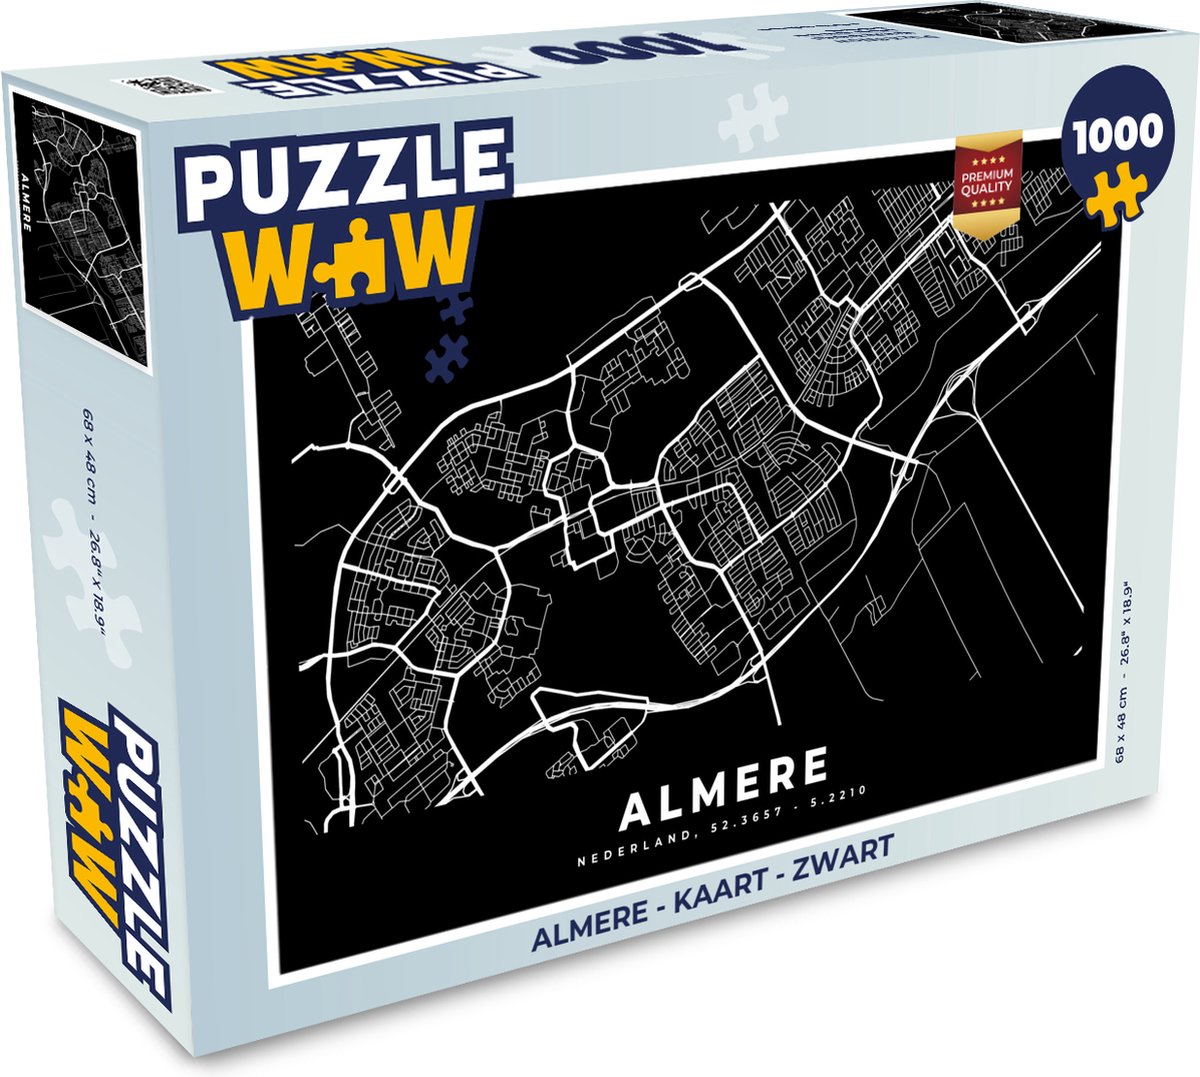 Afbeelding van product PuzzleWow  Puzzel Almere - Kaart - Zwart - Legpuzzel - Puzzel 1000 stukjes volwassenen